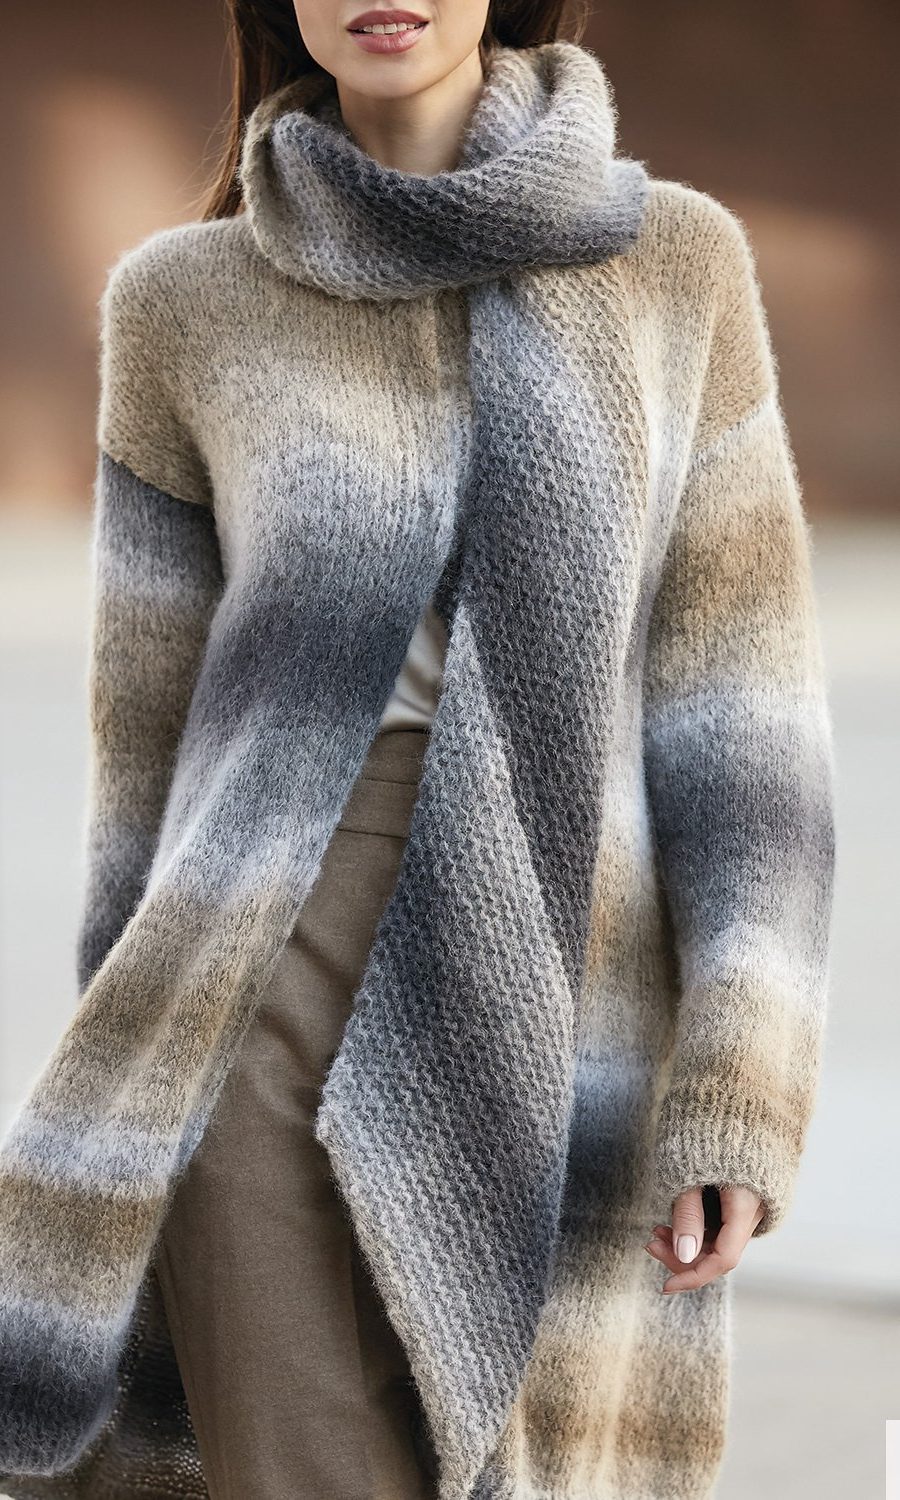 pattern-knit-crochet-woman-coat-autumn-winter-katia-6092-24-g